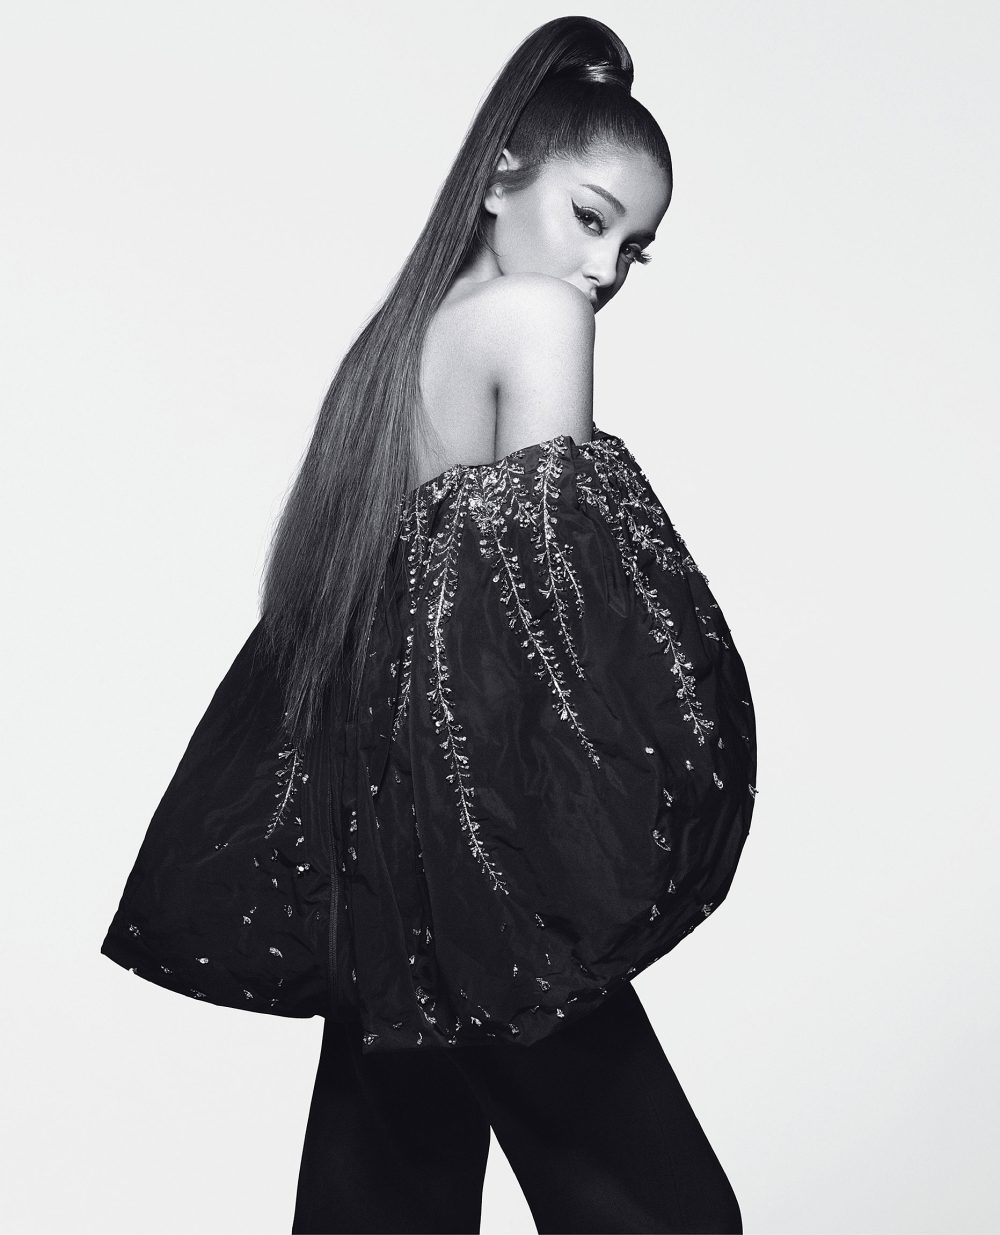 Ariana Grande Givenchy Campaign